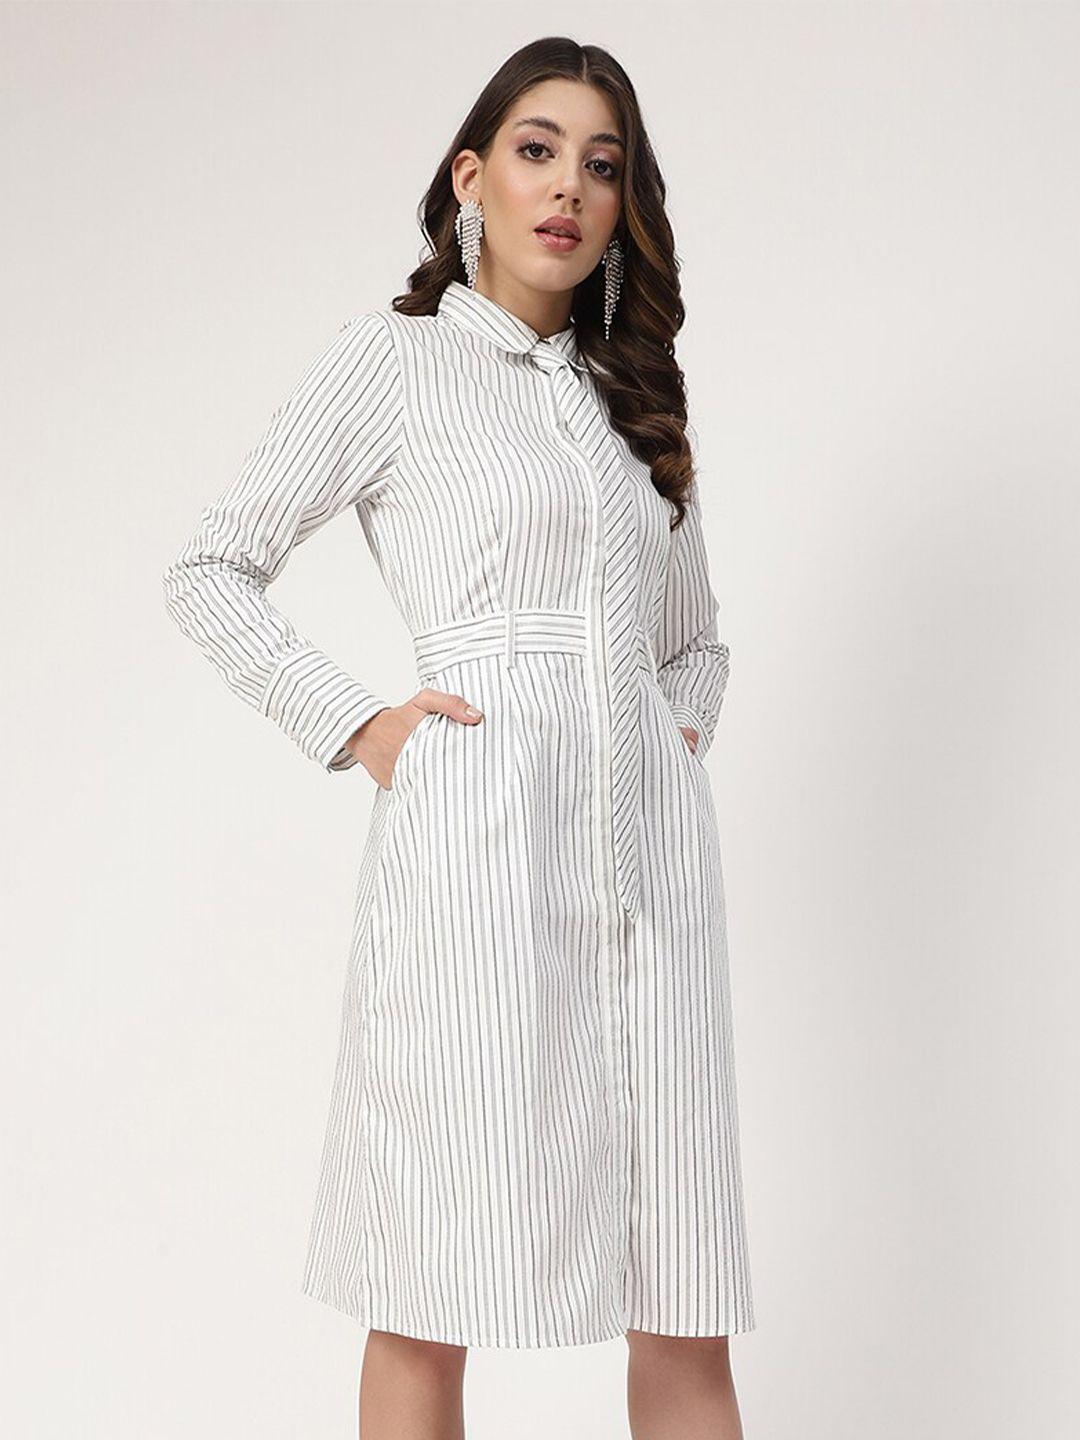 centrestage-women-white-striped-polyester-shirt-dress